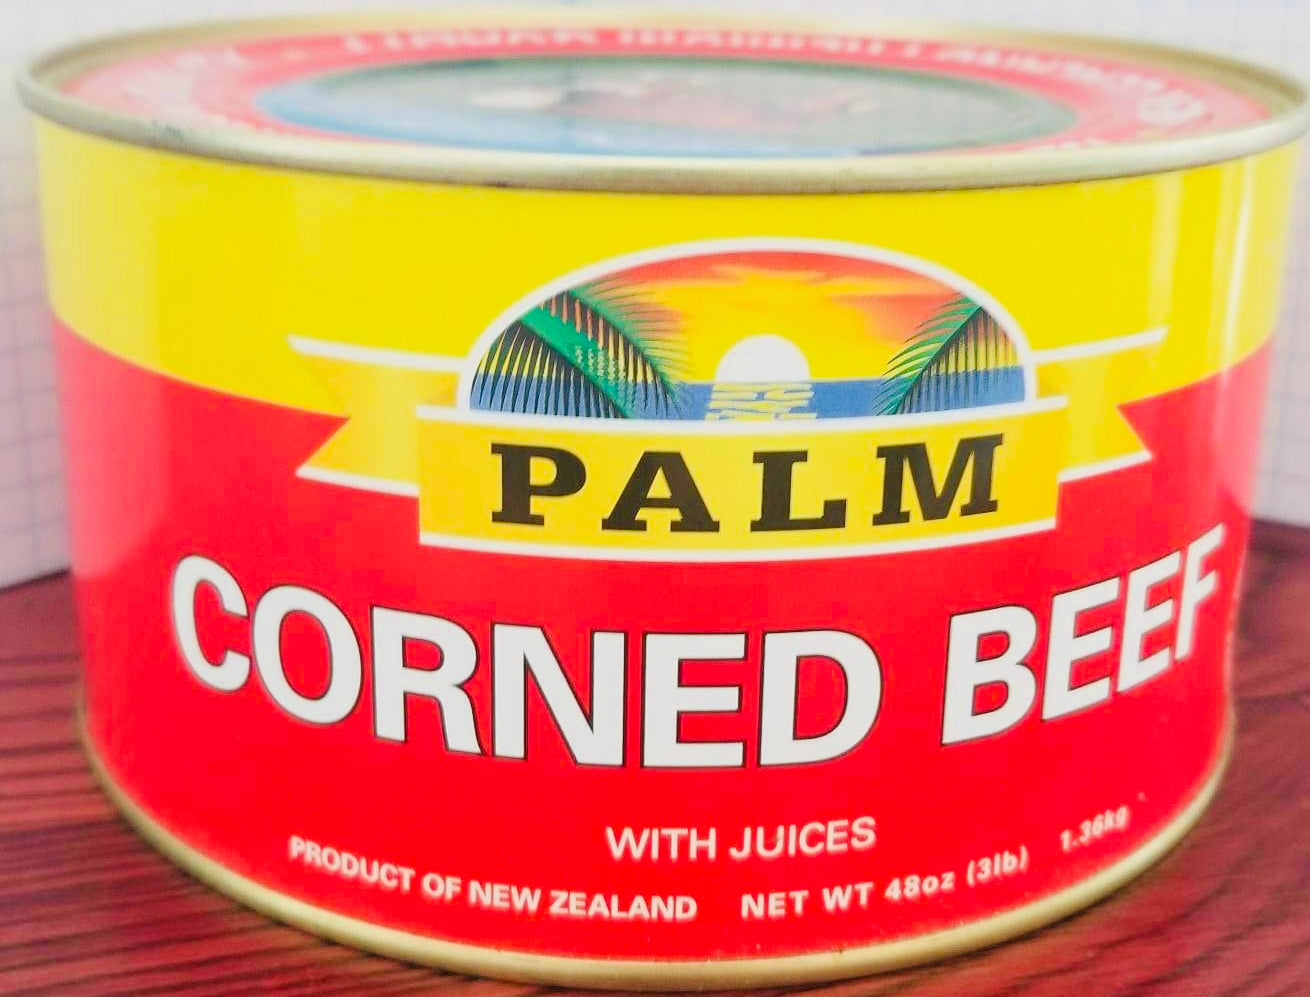 PALM Corned beef 3LB